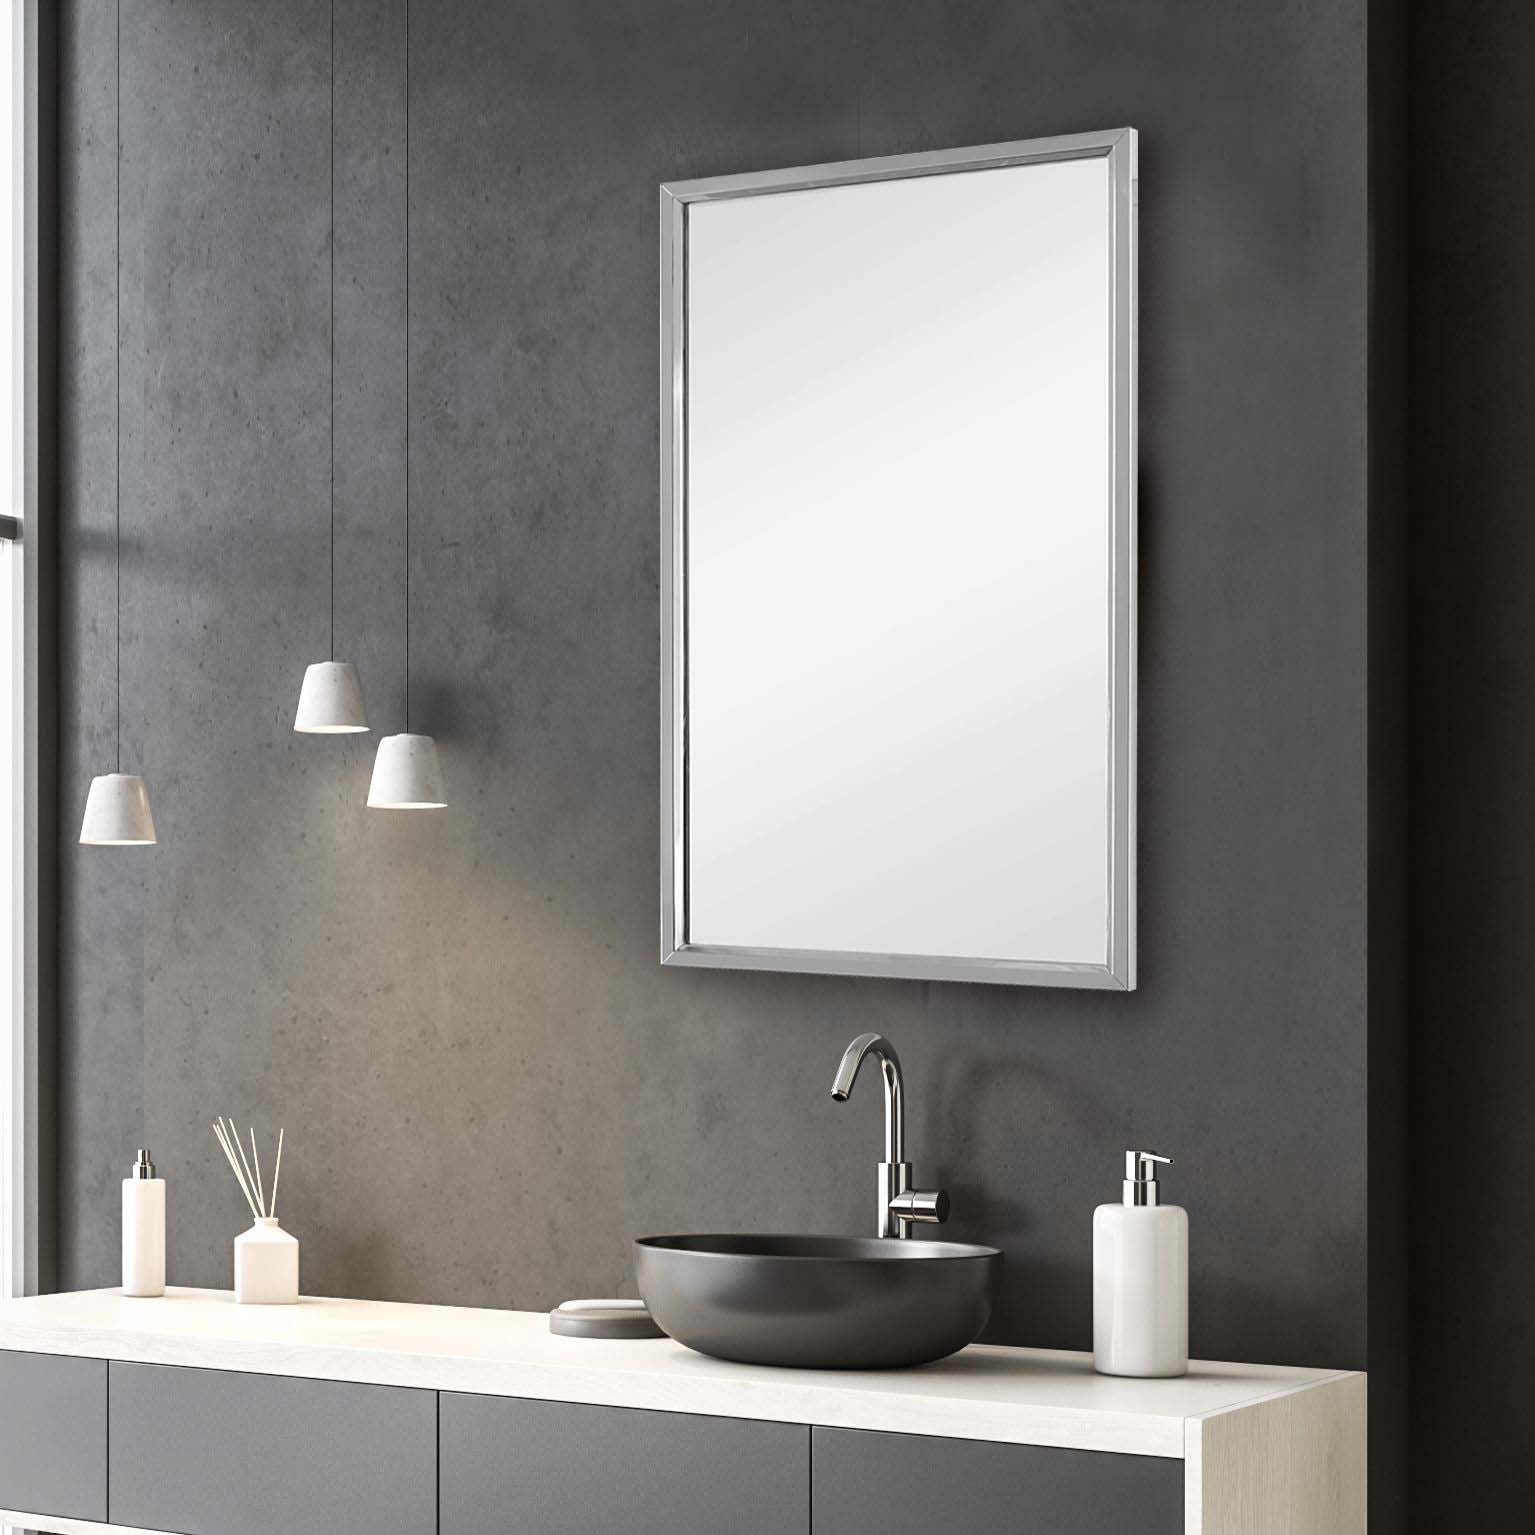 Decor Market Simple Design Mirror - Stainless Steel